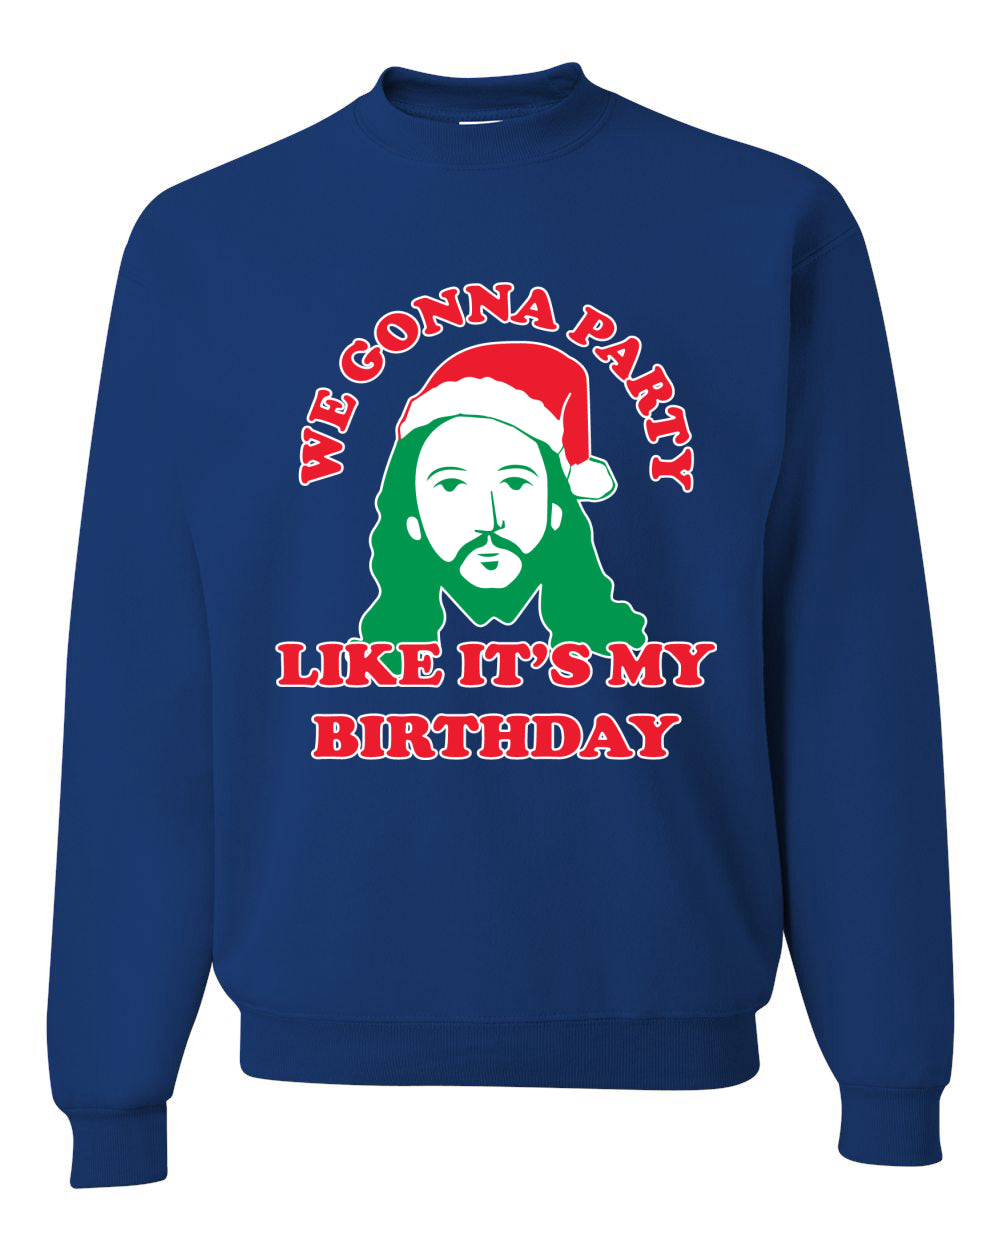 We Gonna Party Like its my Birthday Ugly Christmas Sweater Christmas Unisex Crewneck Graphic Sweatshirt